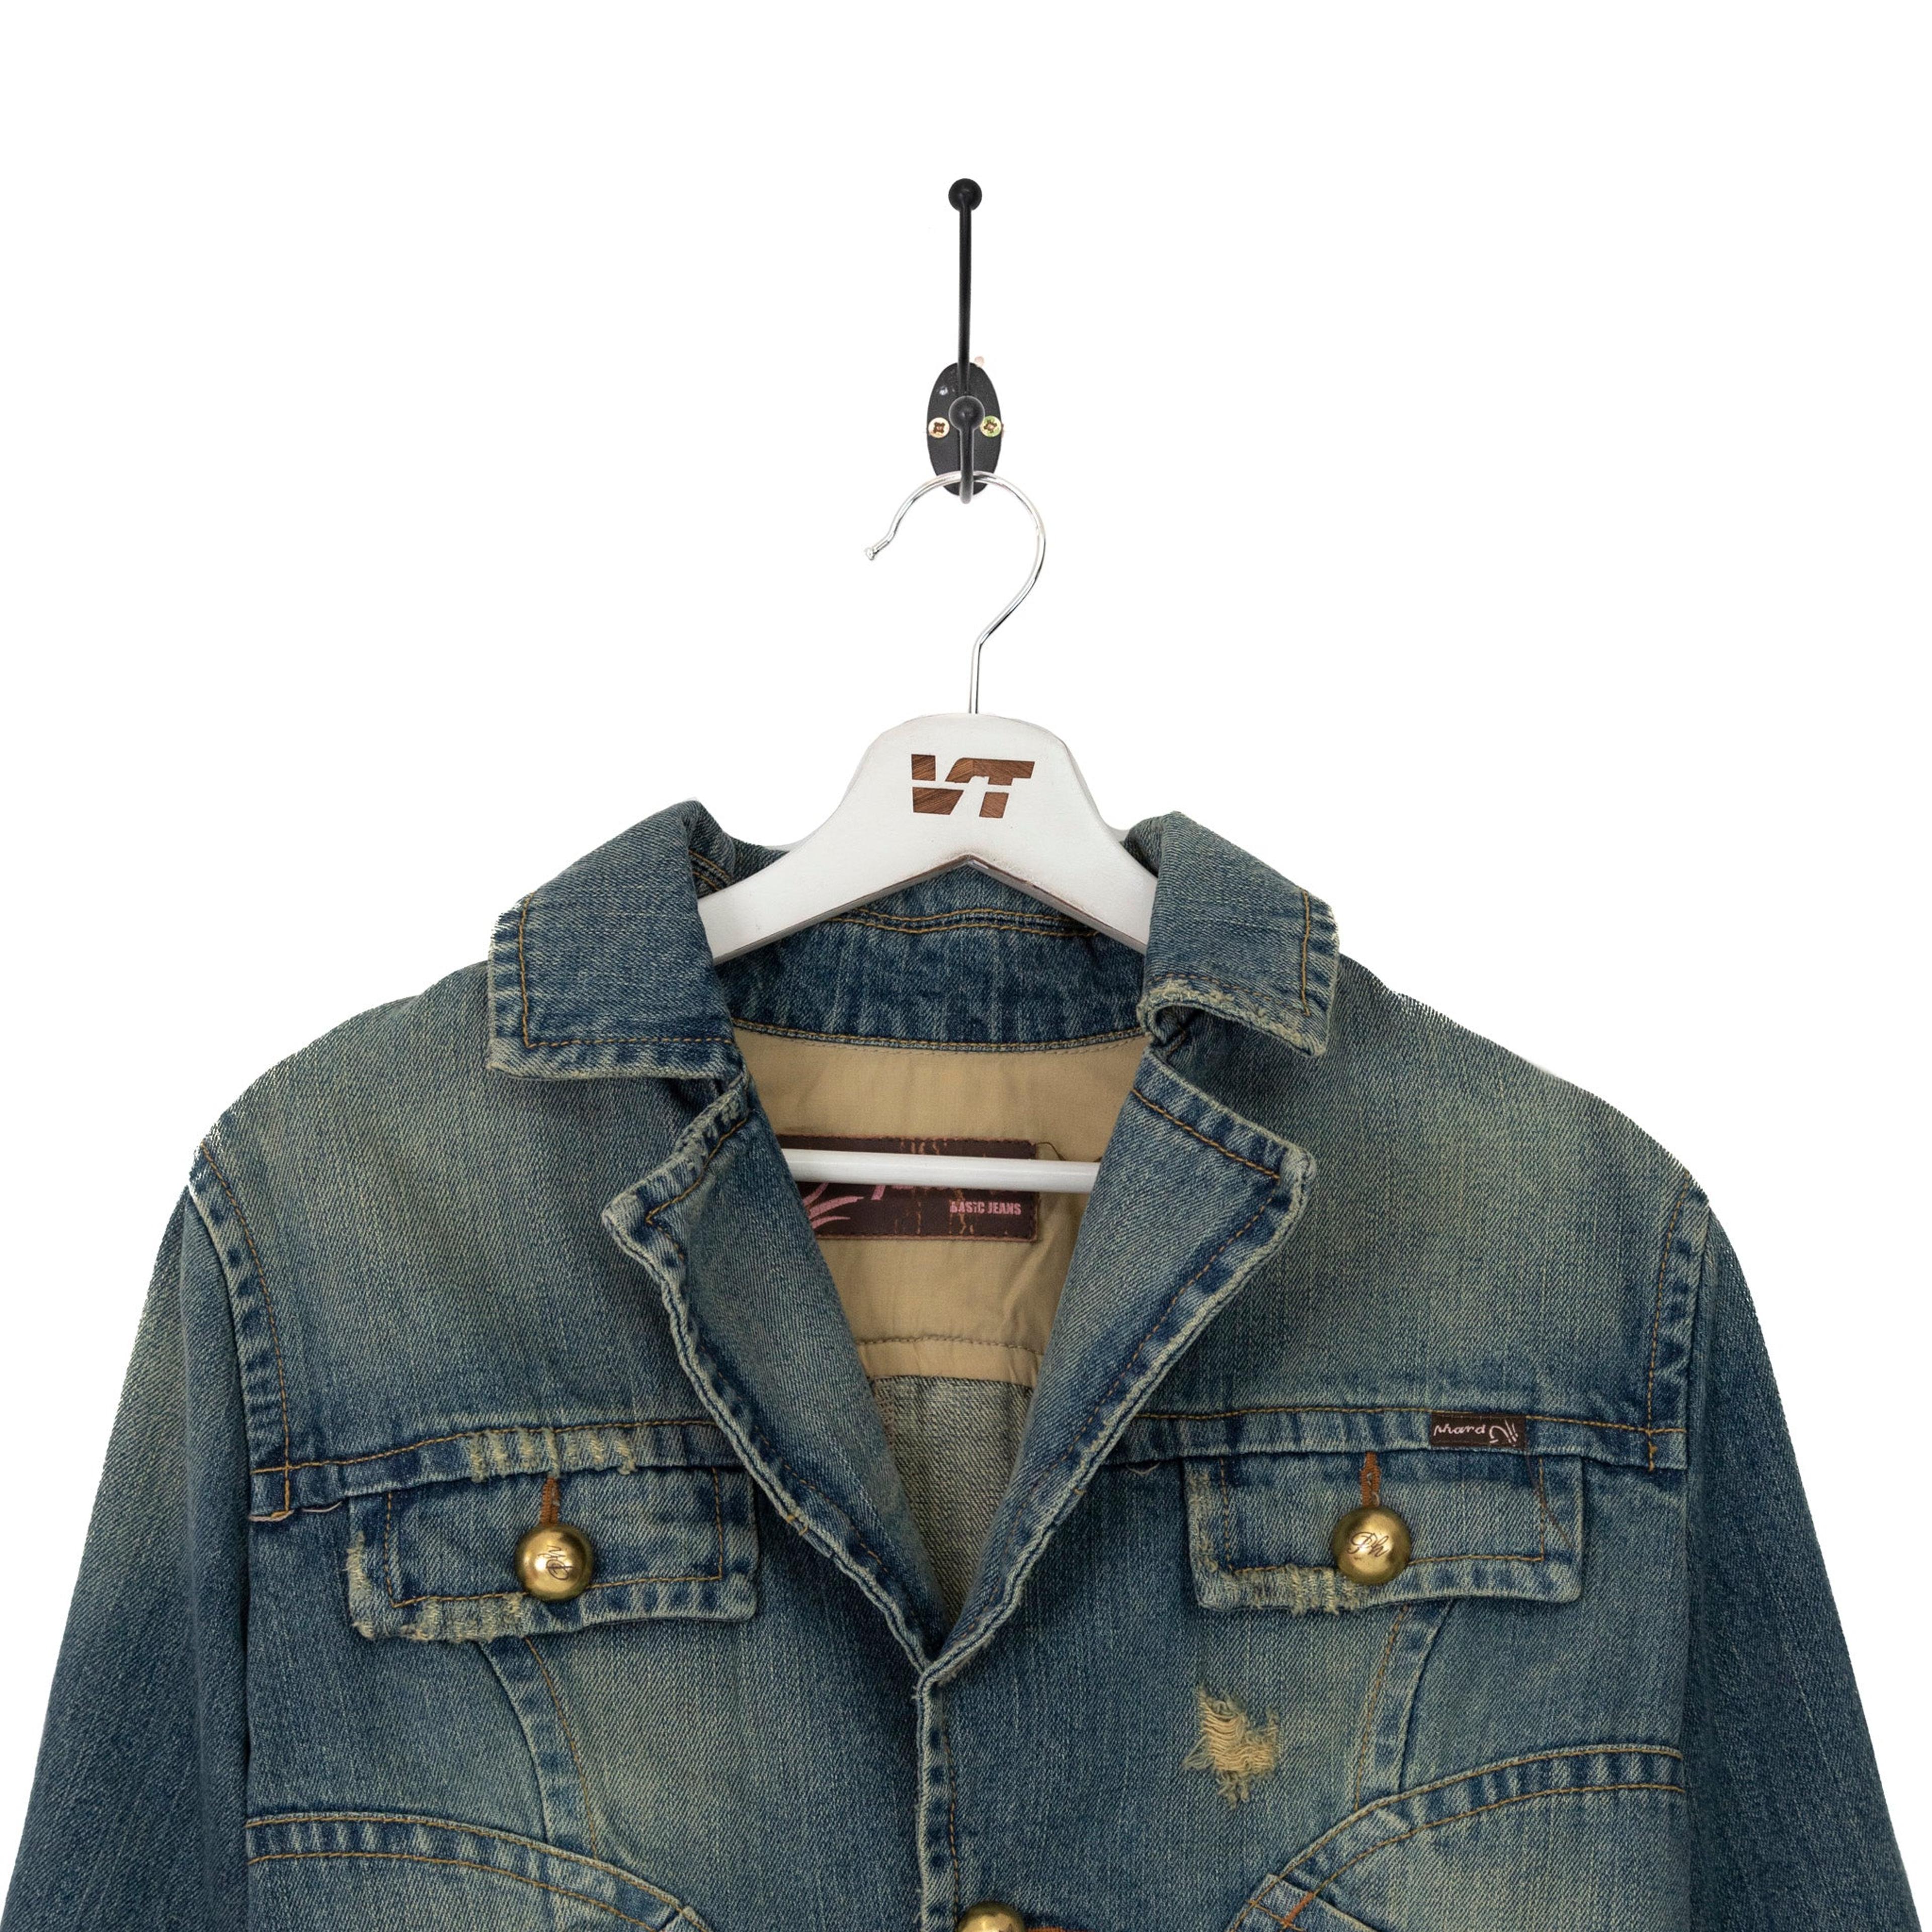 Alternate View 1 of Y2K Phard Jeans Cropped Denim Wash Jacket